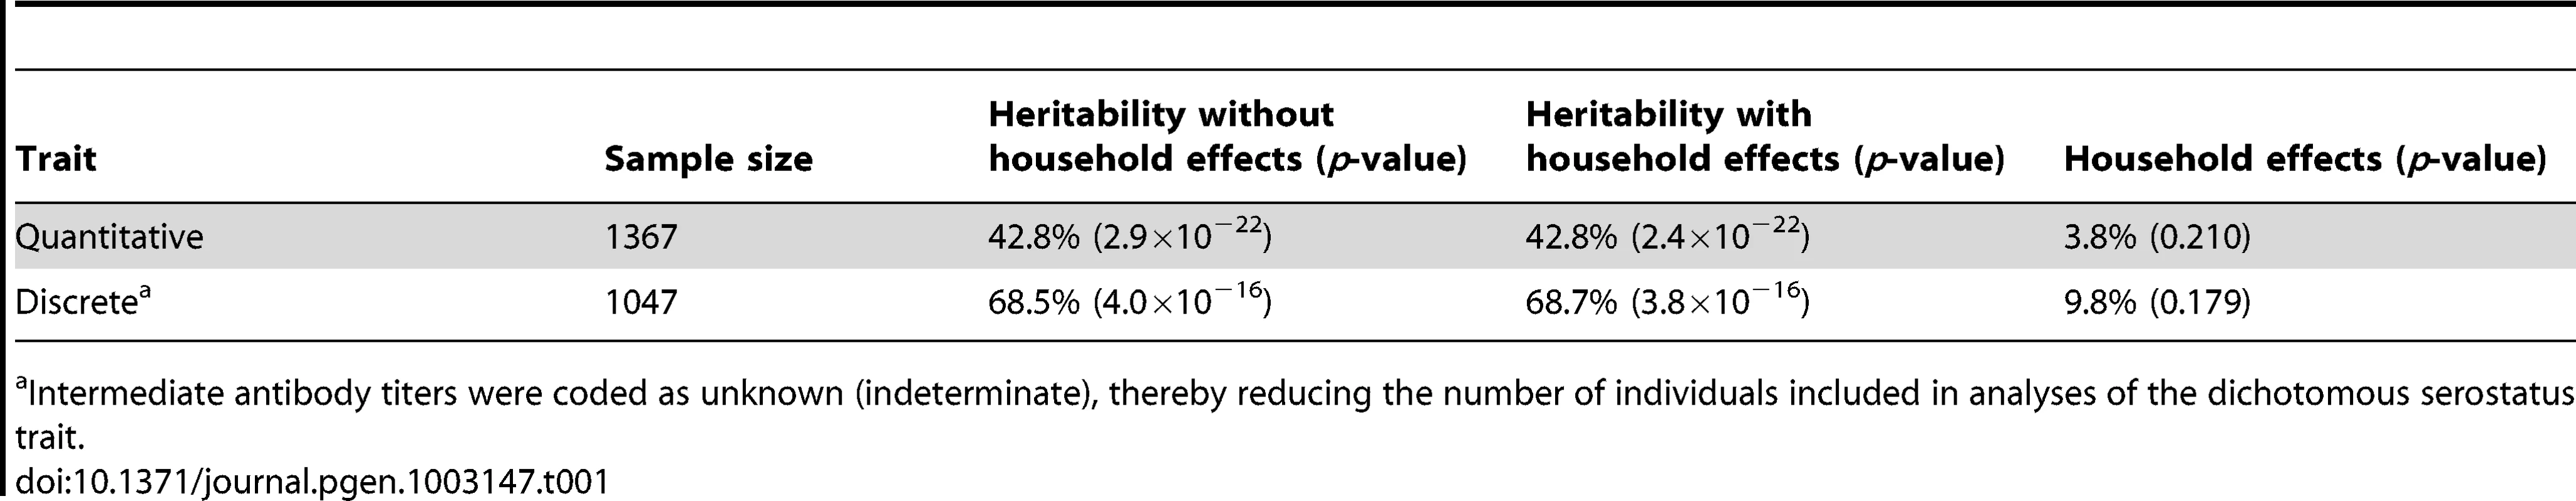 Heritability estimates of EBNA-1 quantitative antibody and discrete serostatus traits, with and without household effects.